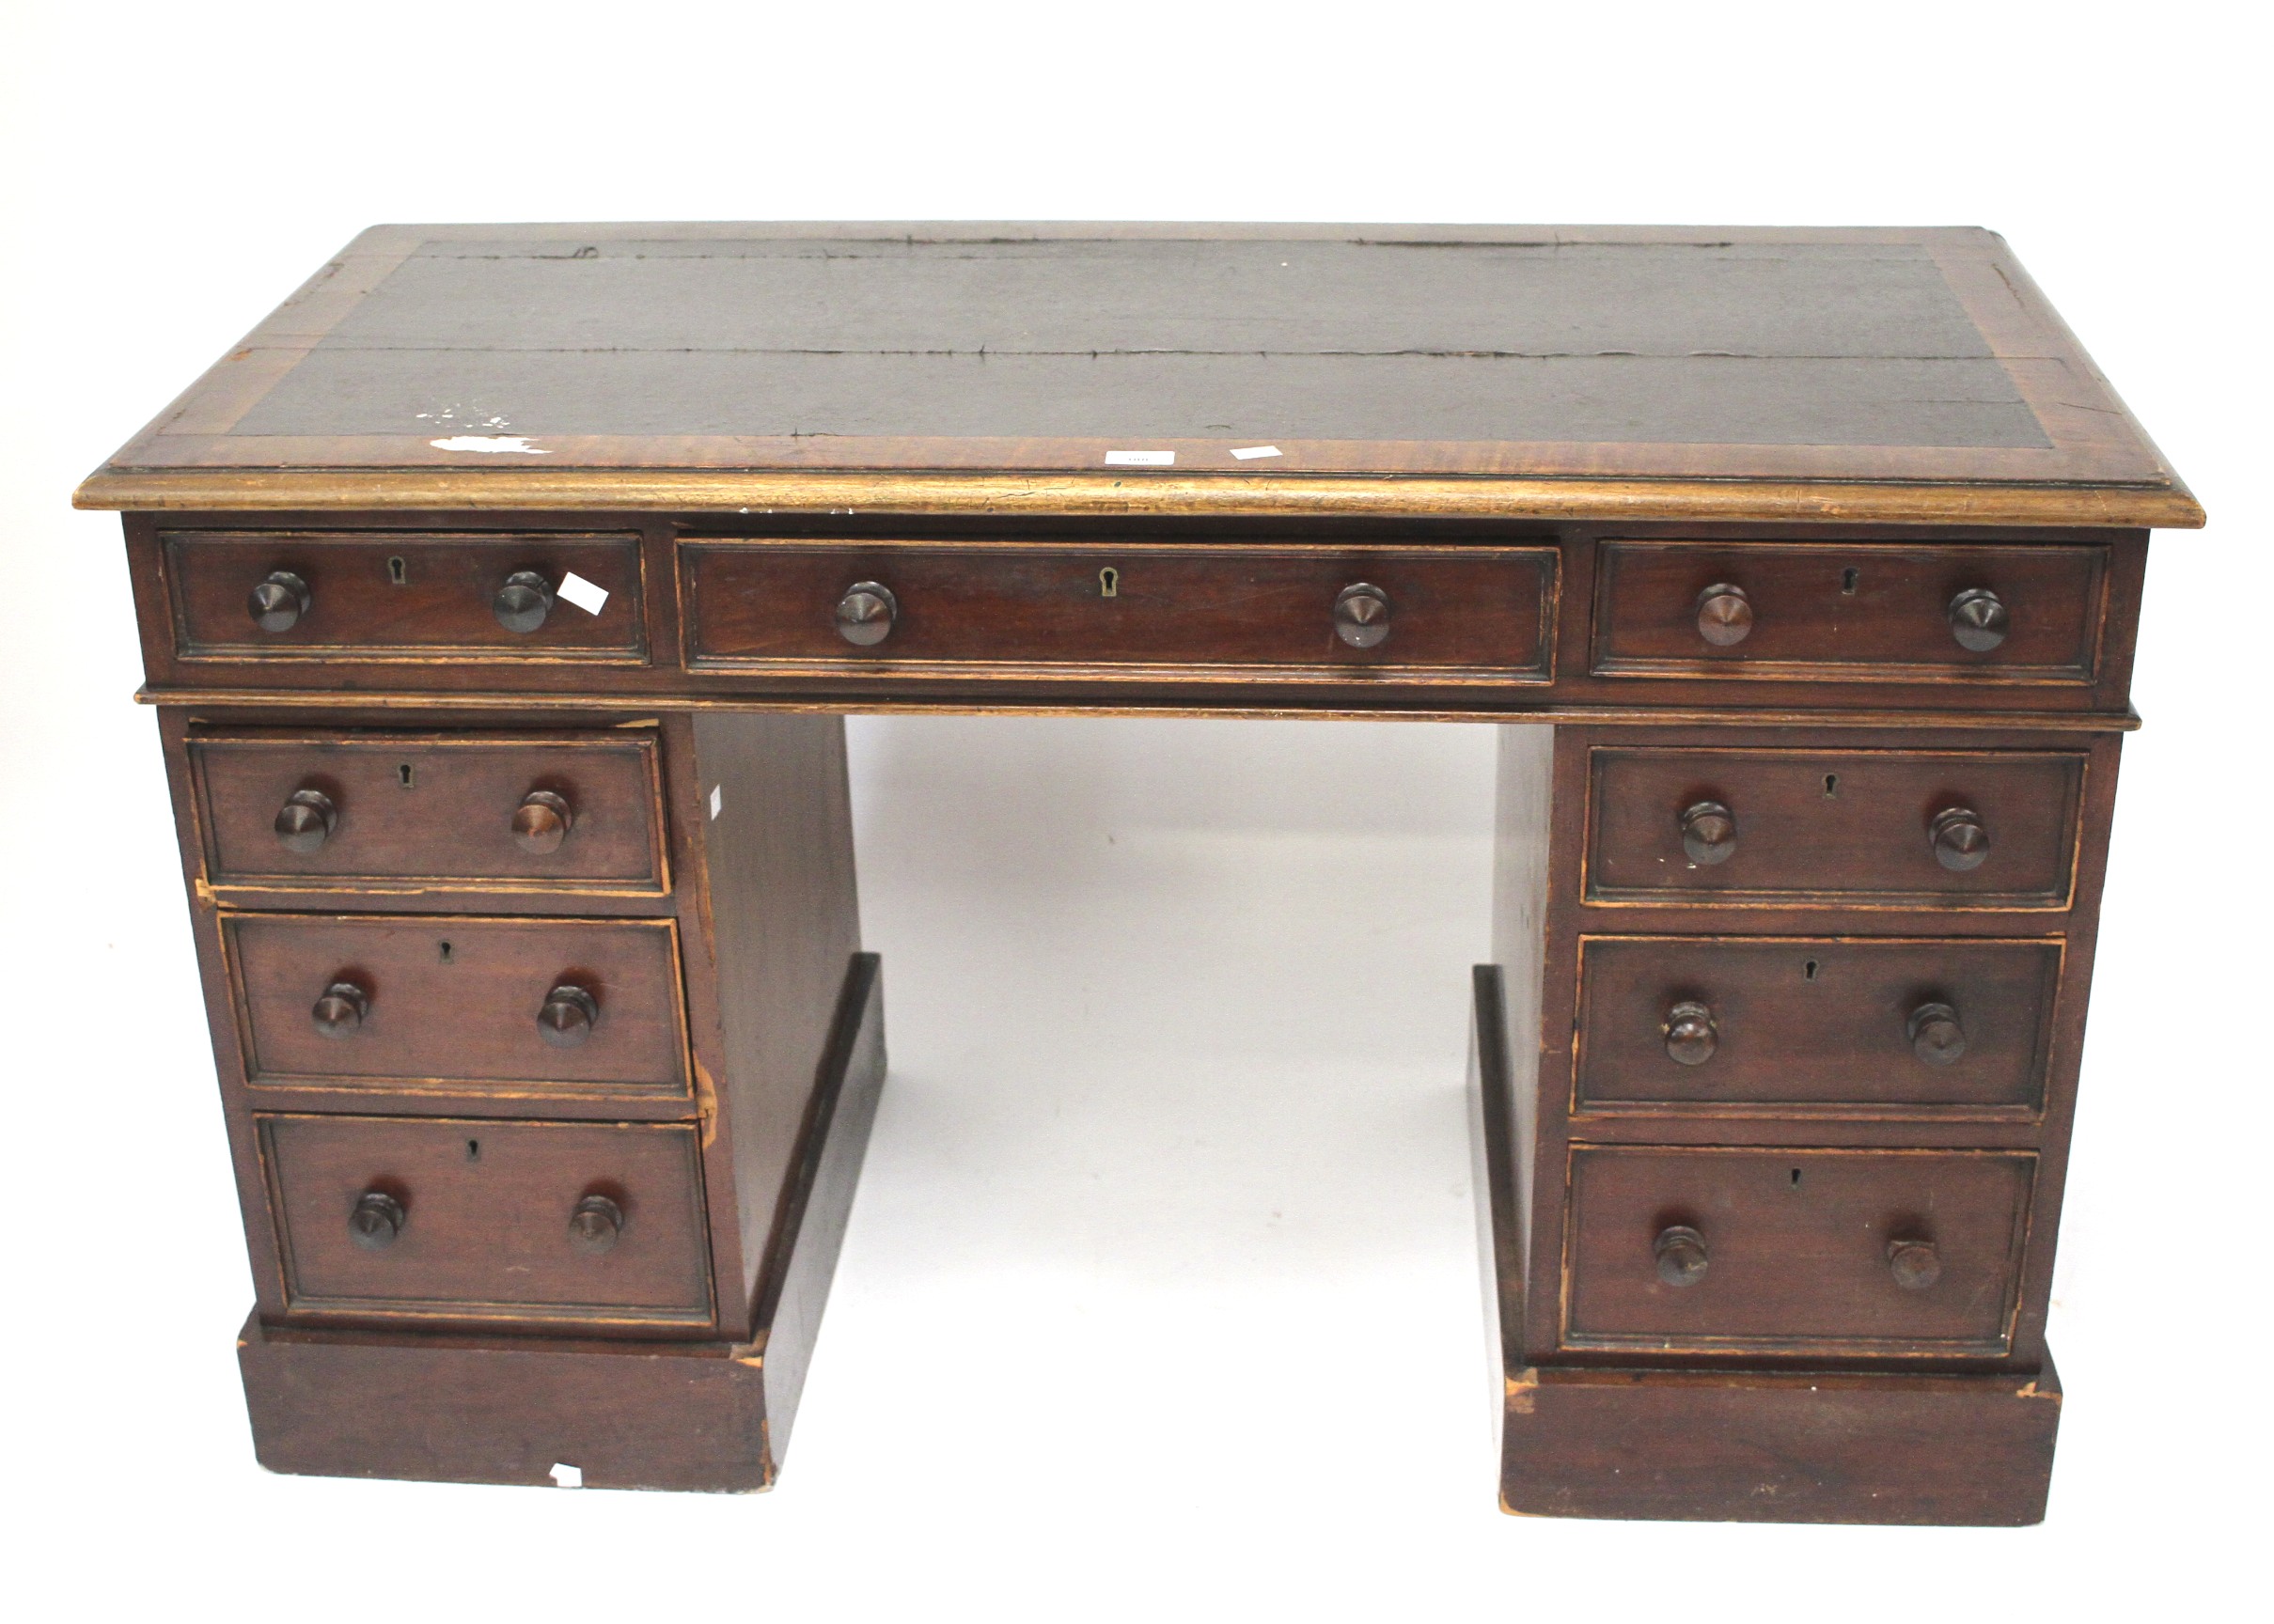 An early 20th century mahogany pedestal desk.